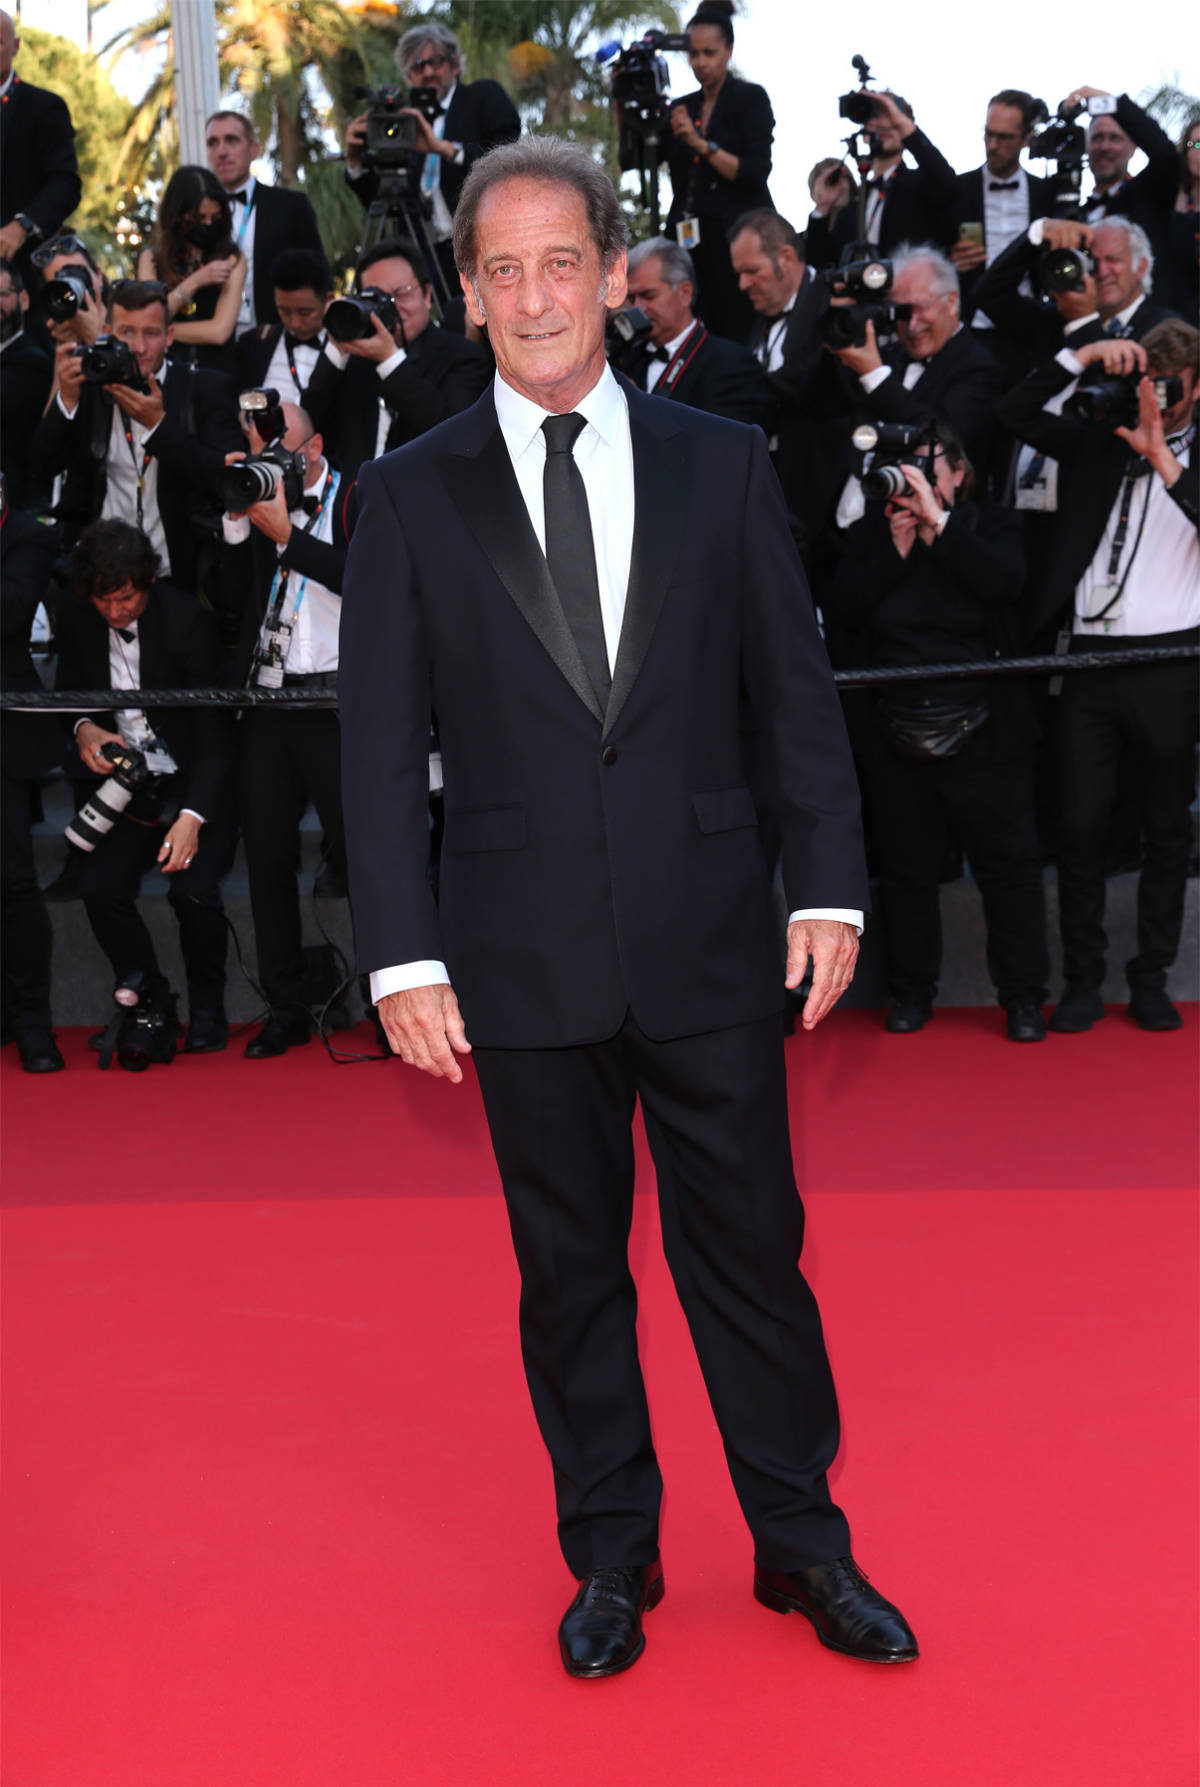 Vincent Lindon In CELINE HOMME During The 75th Cannes Film Festival